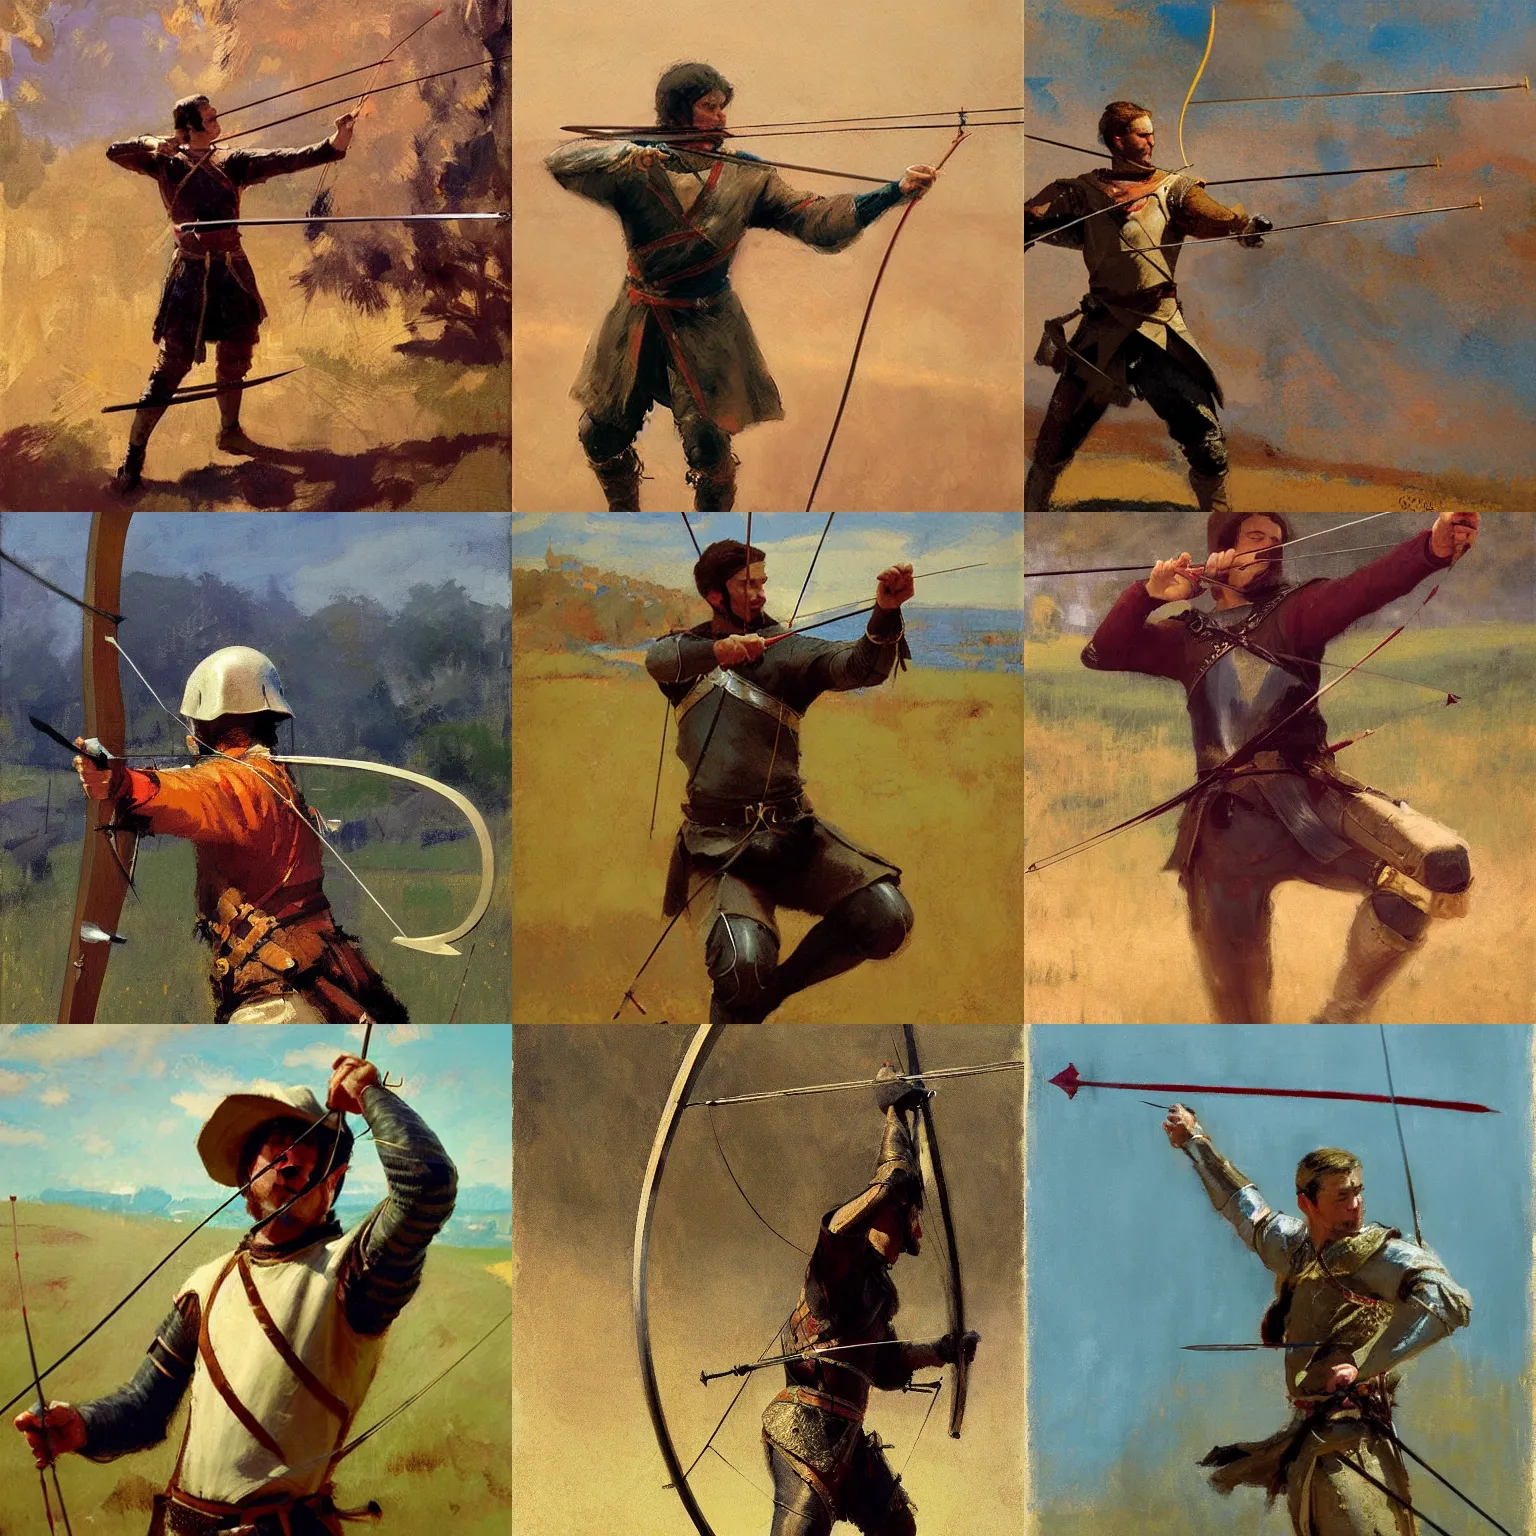 Prompt: medieval archer aiming a bow, elegant, close - up, impressionistic, craig mullins, greg manchess, liepke, ruan jia, jeffrey catherine jones, bernie fuchs